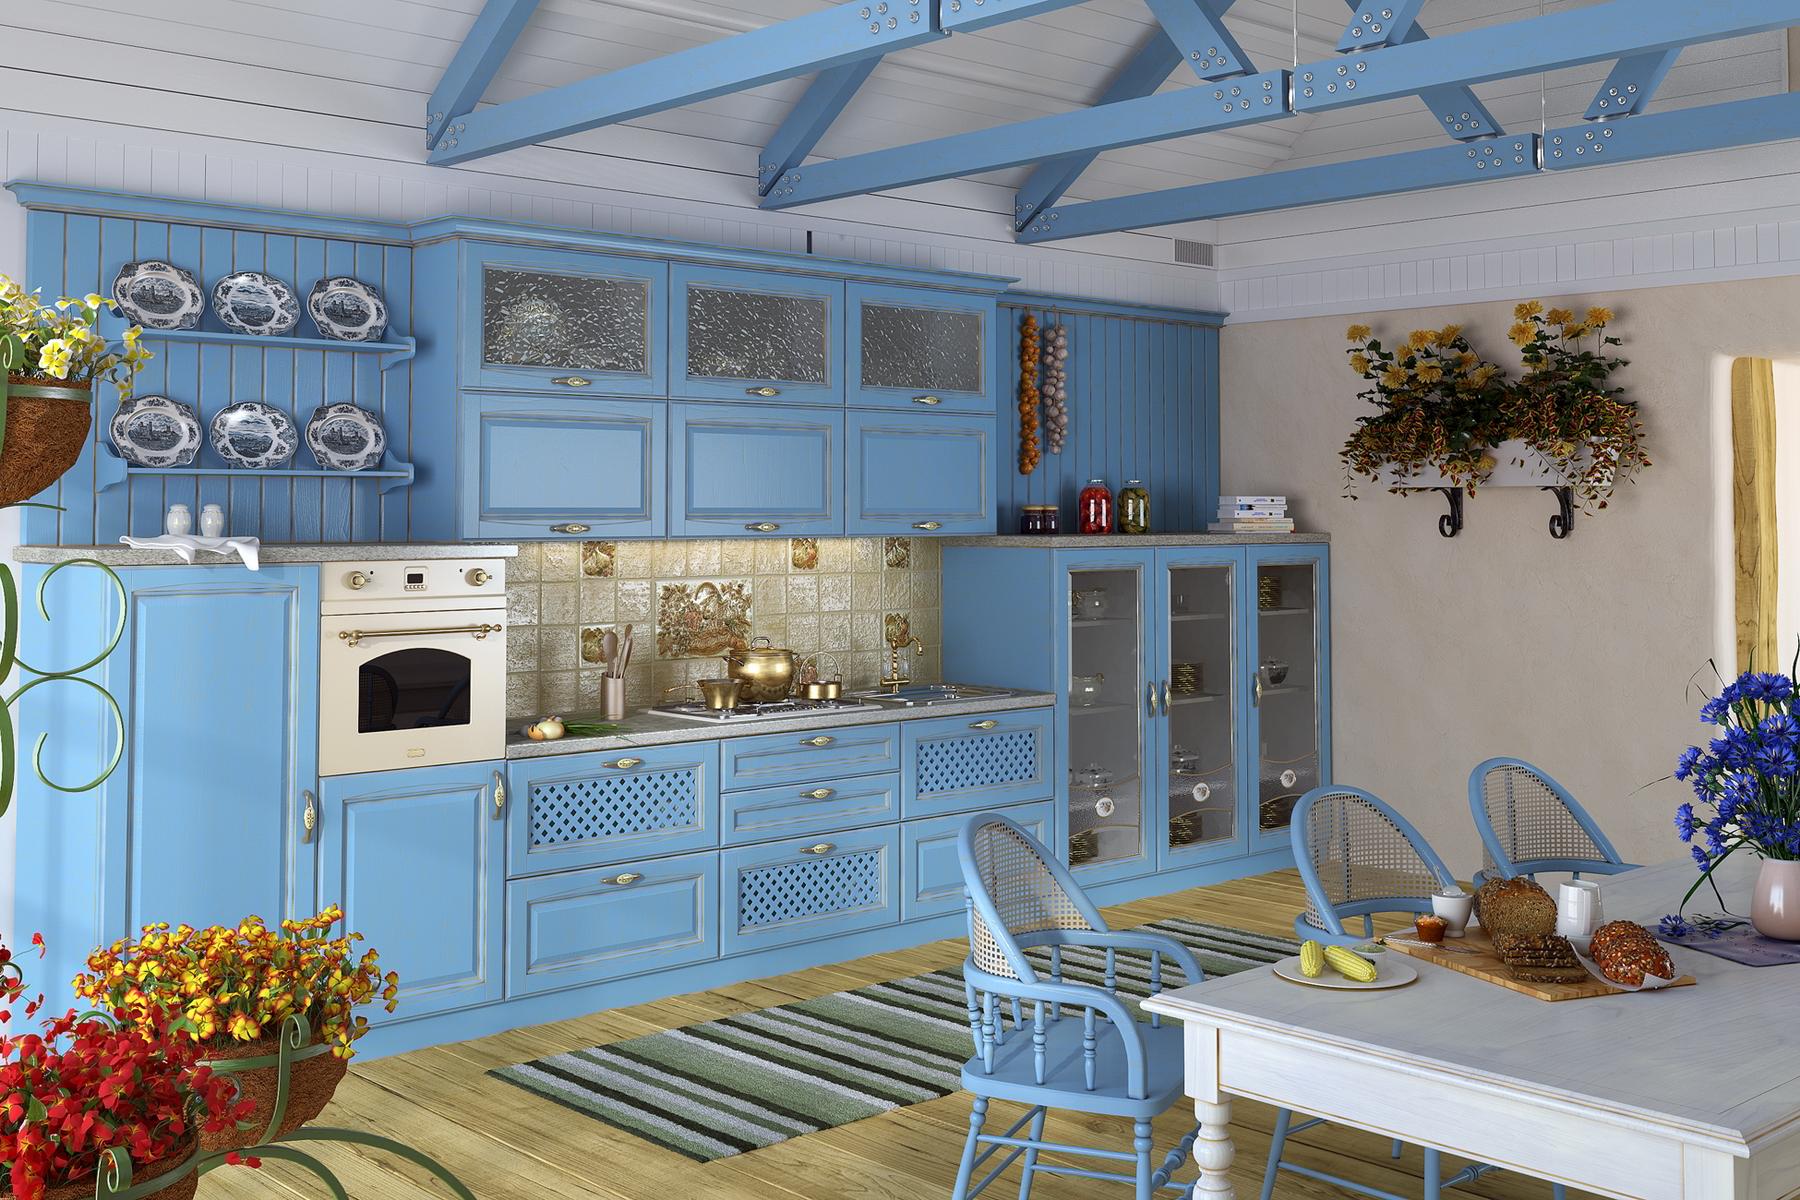 Цвет кухни прованс. Голубая кухня Прованс Антарес. Кухня Прованс голубая патина. Голубые кухни. Кухня в голубых тонах.